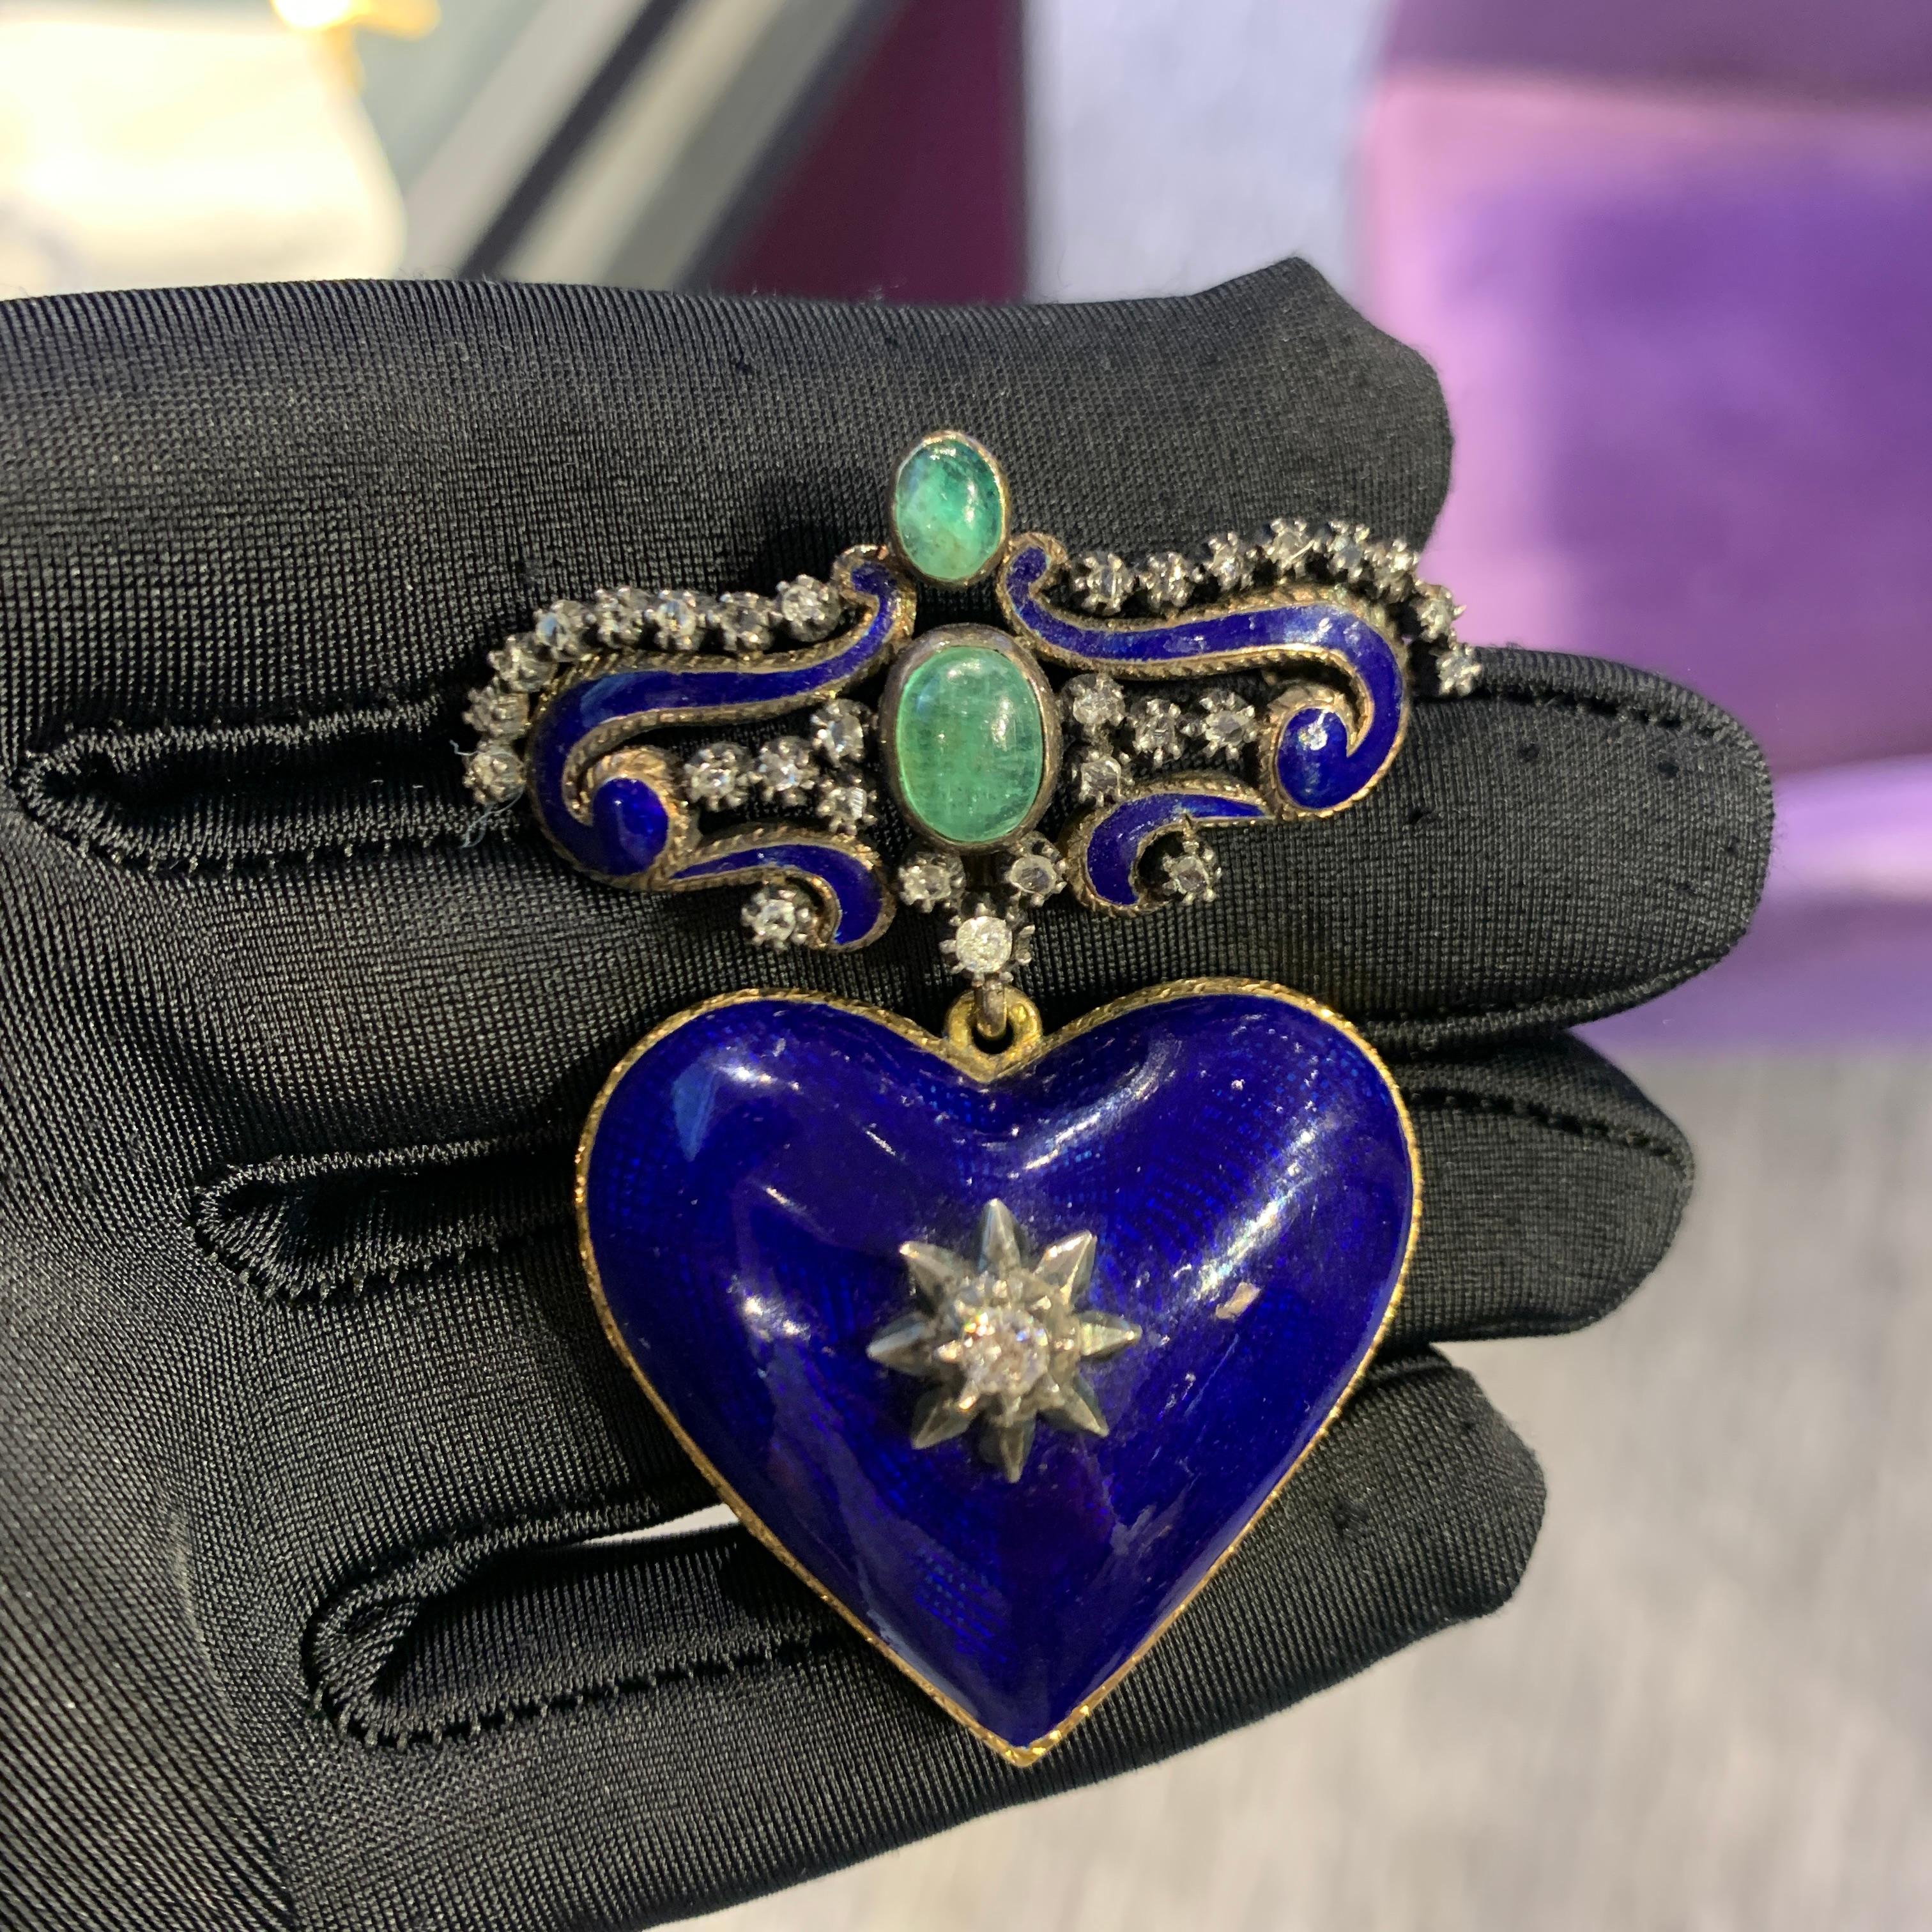 Diamond & Emerald Heart Shaped Blue Enamel Locket Brooch

An 18 karat and 14 karat gold brooch featuring a heart shaped locket. The brooch is set with 2 cabochon emeralds, 30 round cut diamonds, and blue enamel. 

Measurements: 2.38